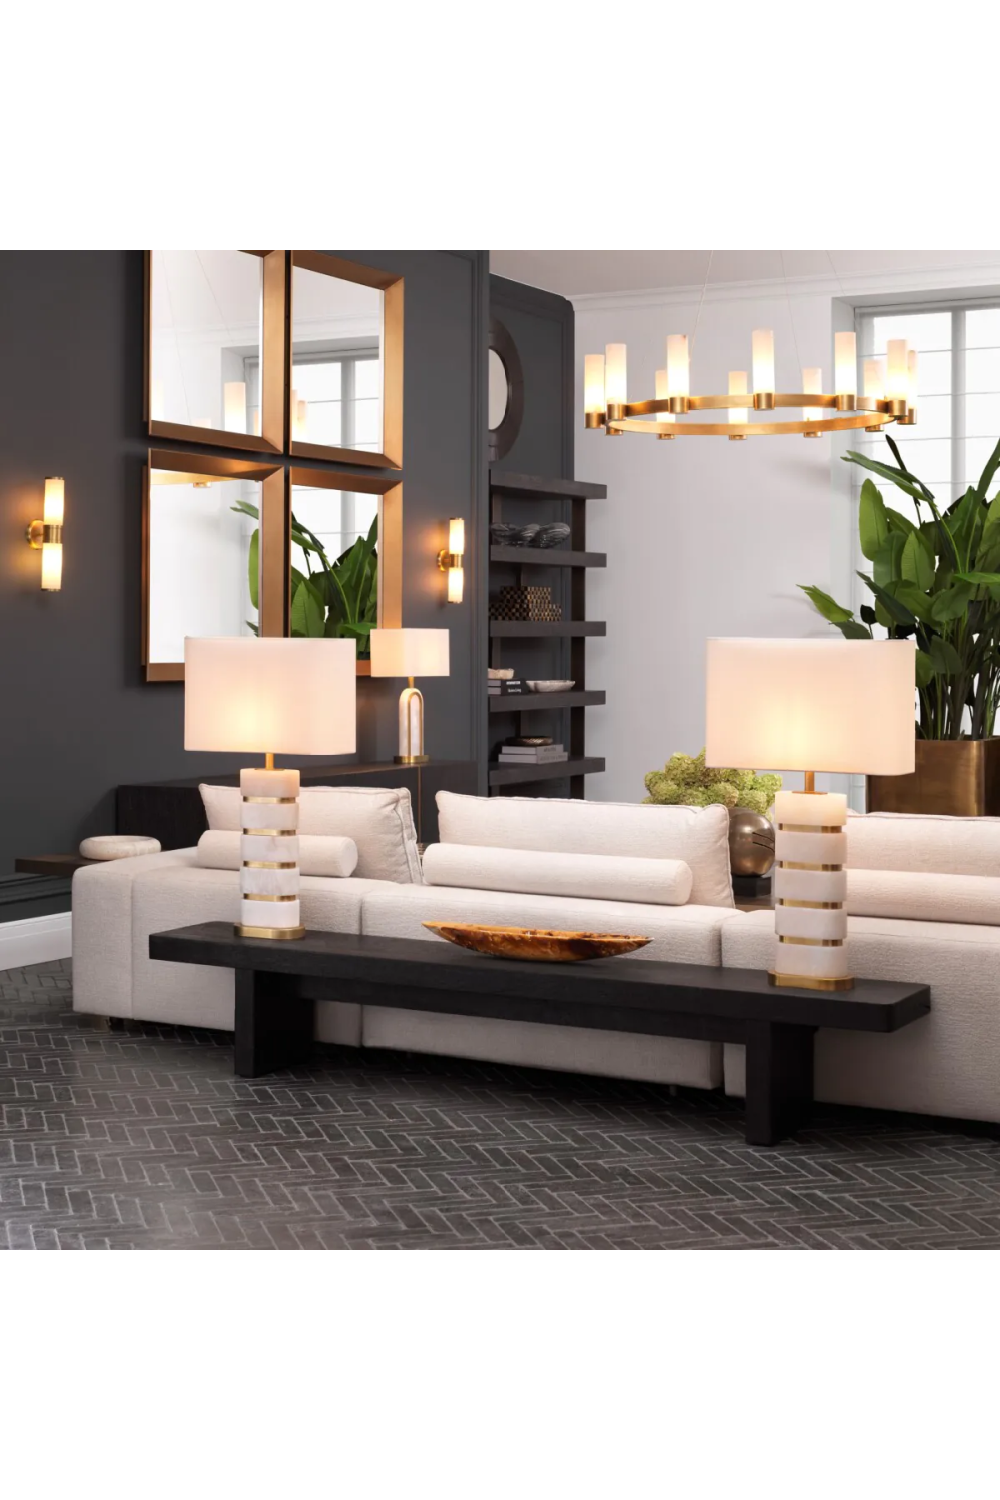 White Modern Table Lamp | Eichholtz Newall | Oroa.com